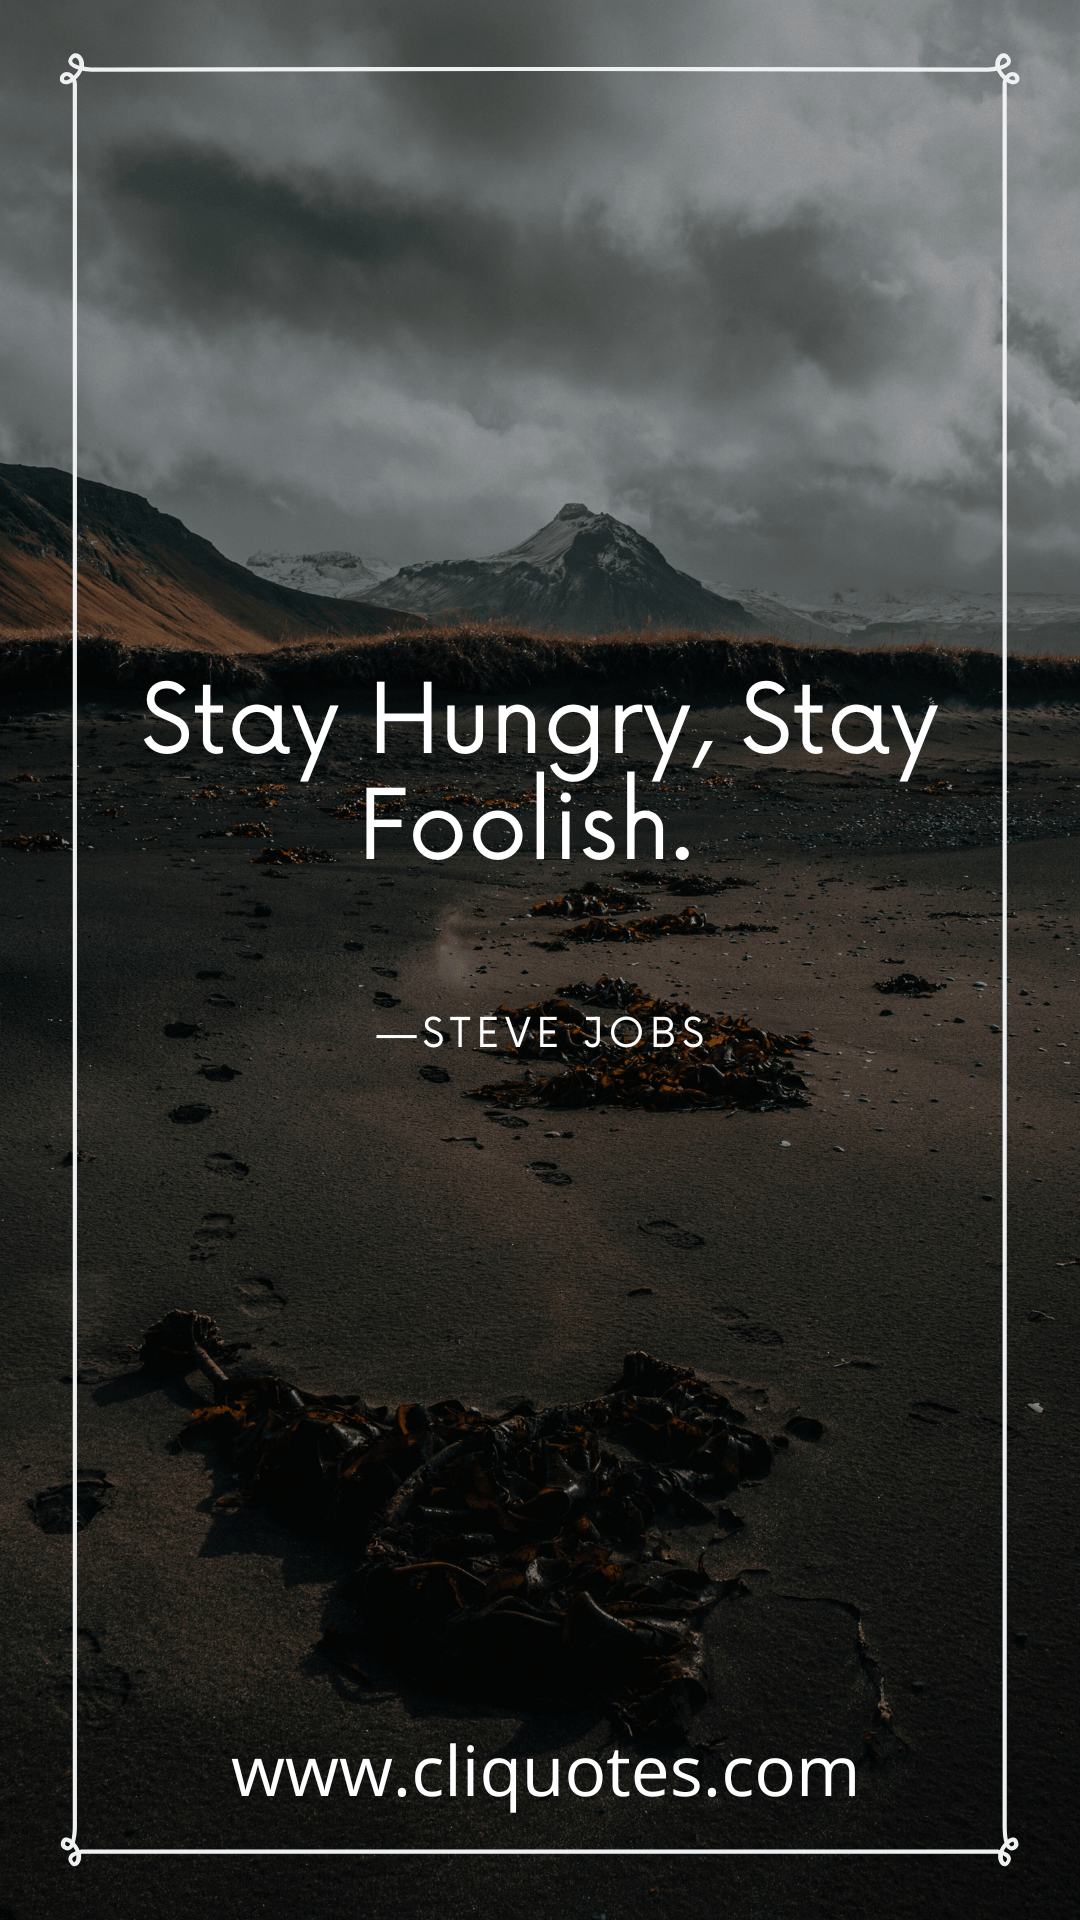 Stay Hungry, Stay Foolish. —STEVE JOBS